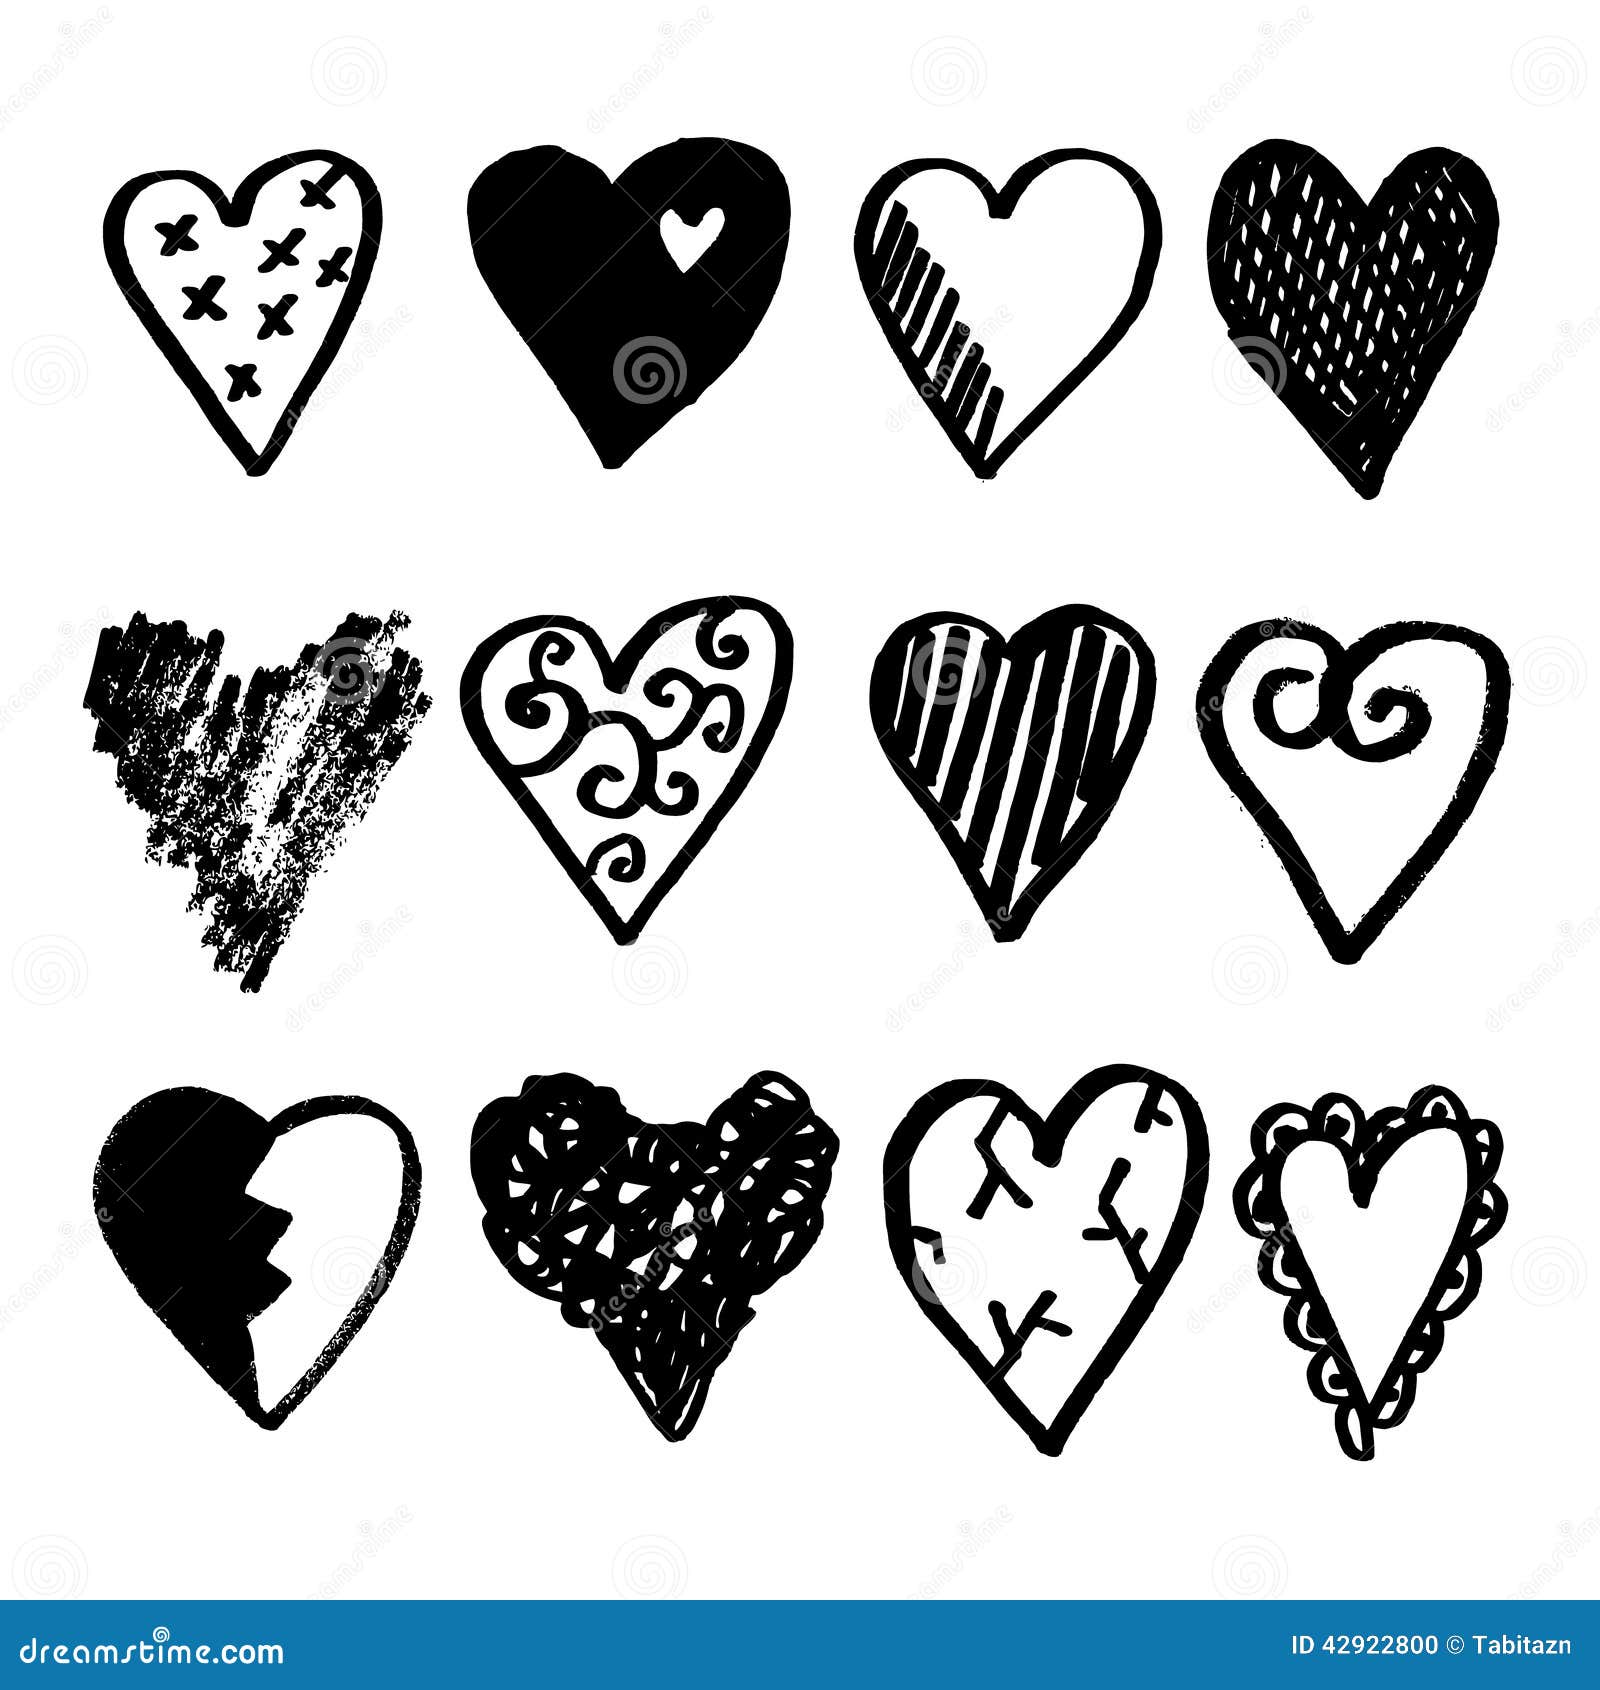 Image for romantic doodle art vector